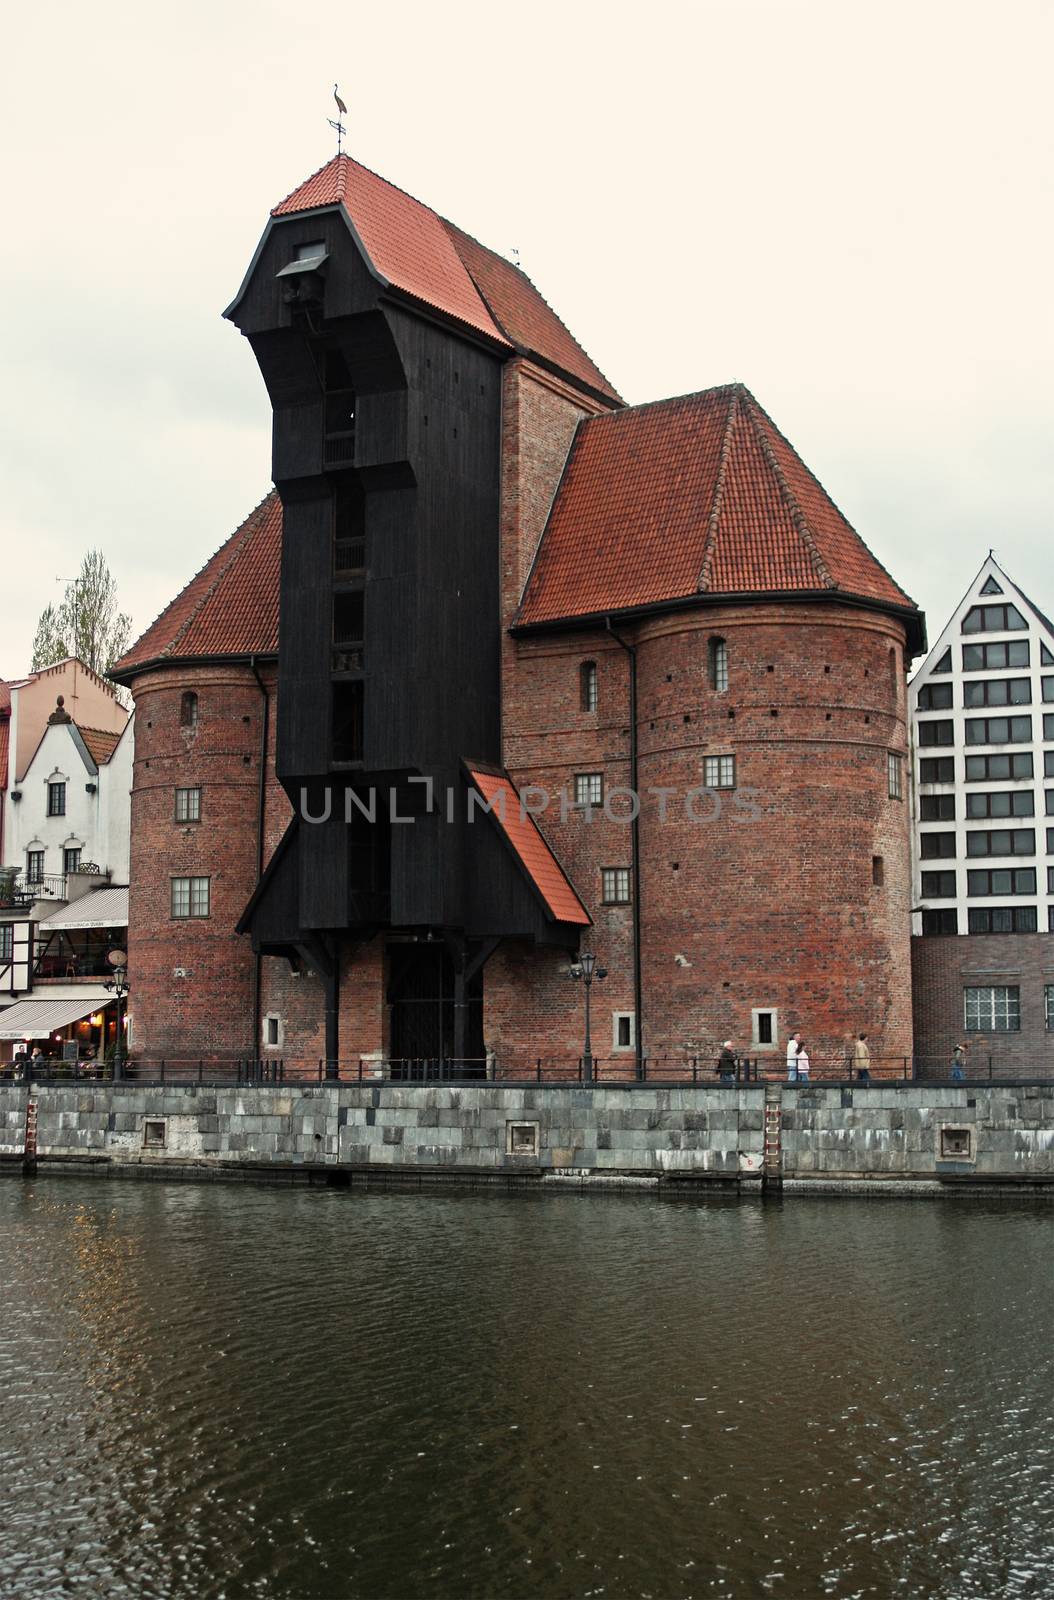 The medieval port crane